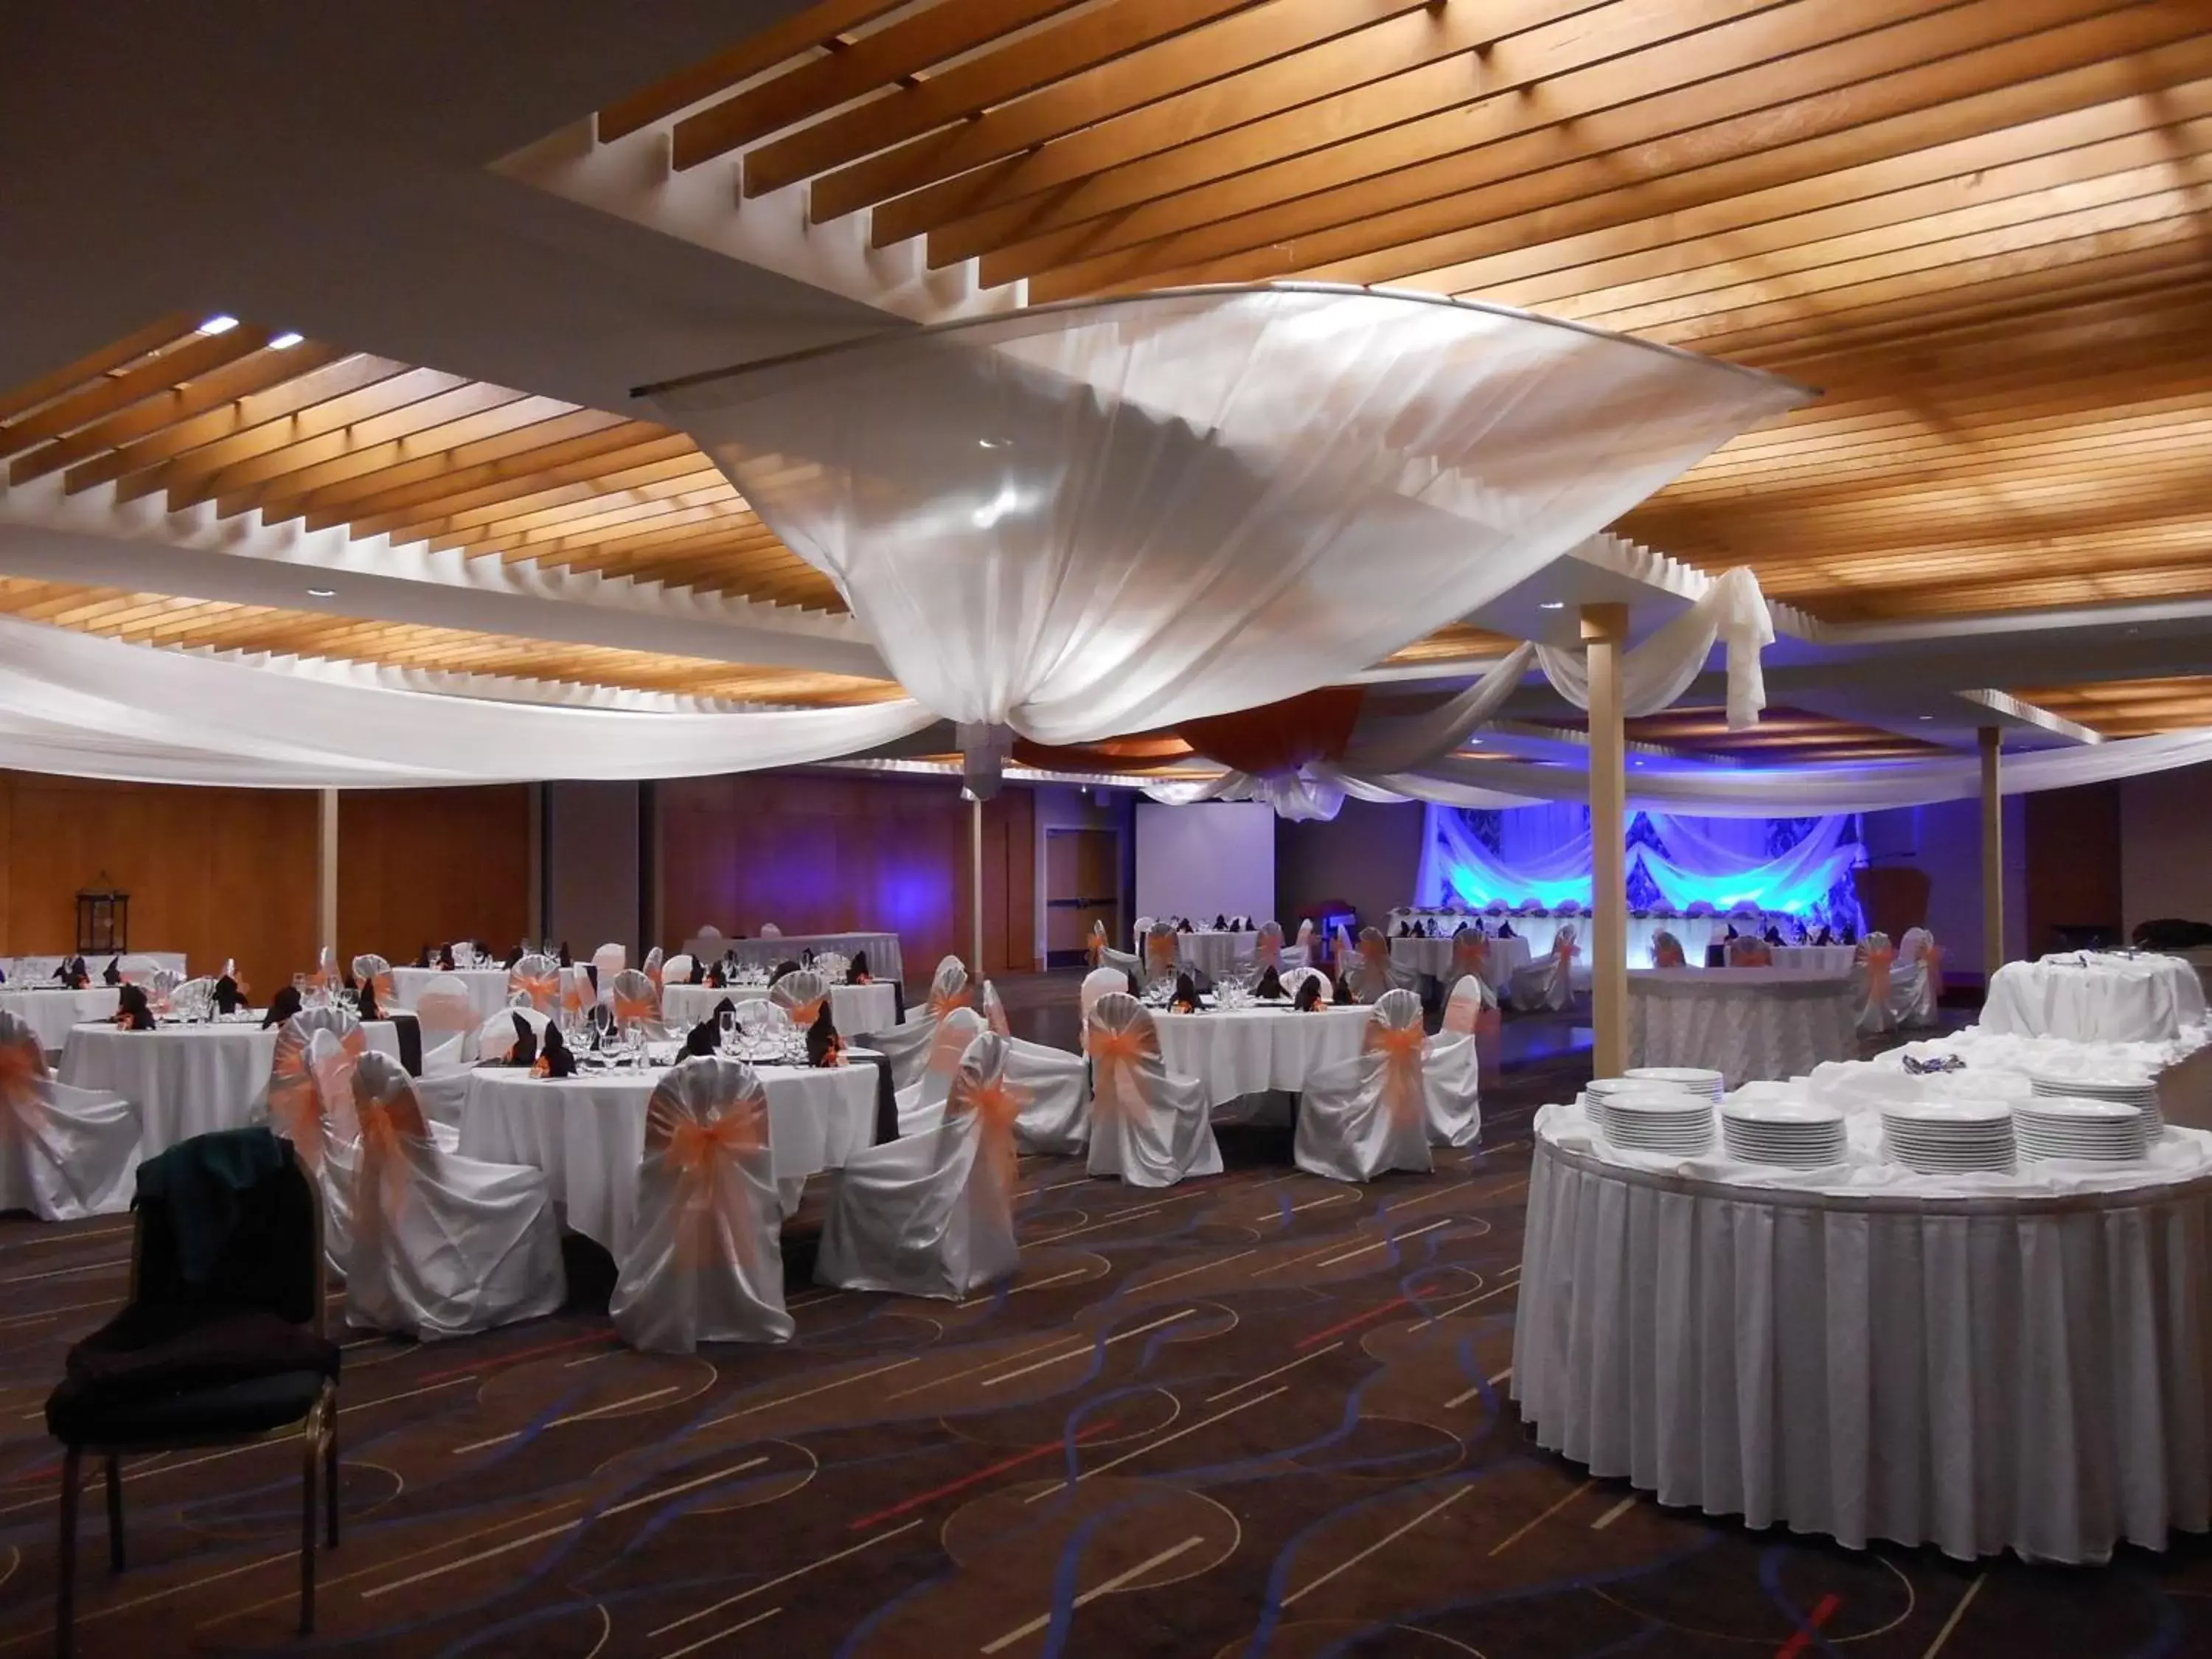 On site, Banquet Facilities in Radisson Hotel & Convention Center Edmonton